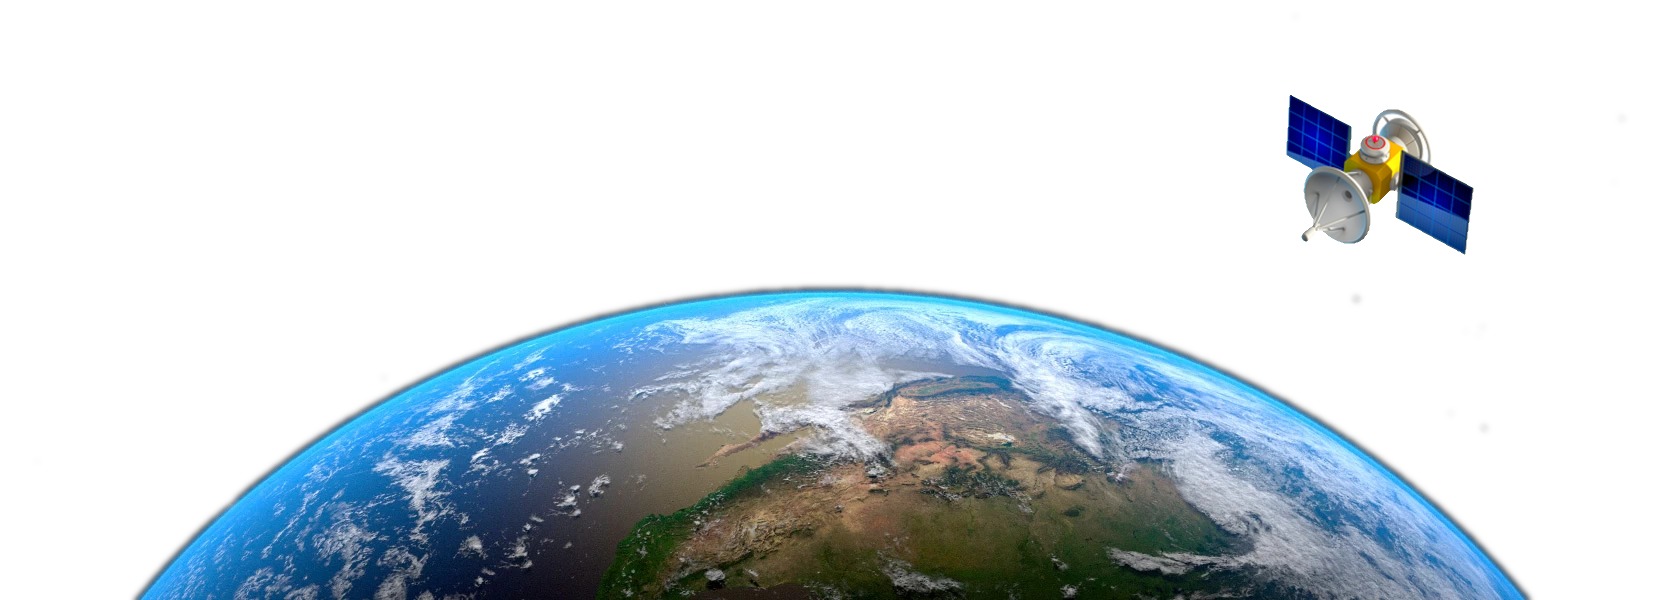 Earth with an emoji satellite orbiting it.